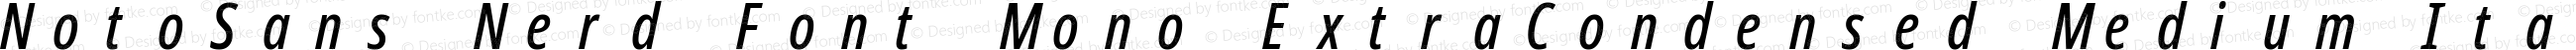 Noto Sans ExtraCondensed Medium Italic Nerd Font Complete Mono